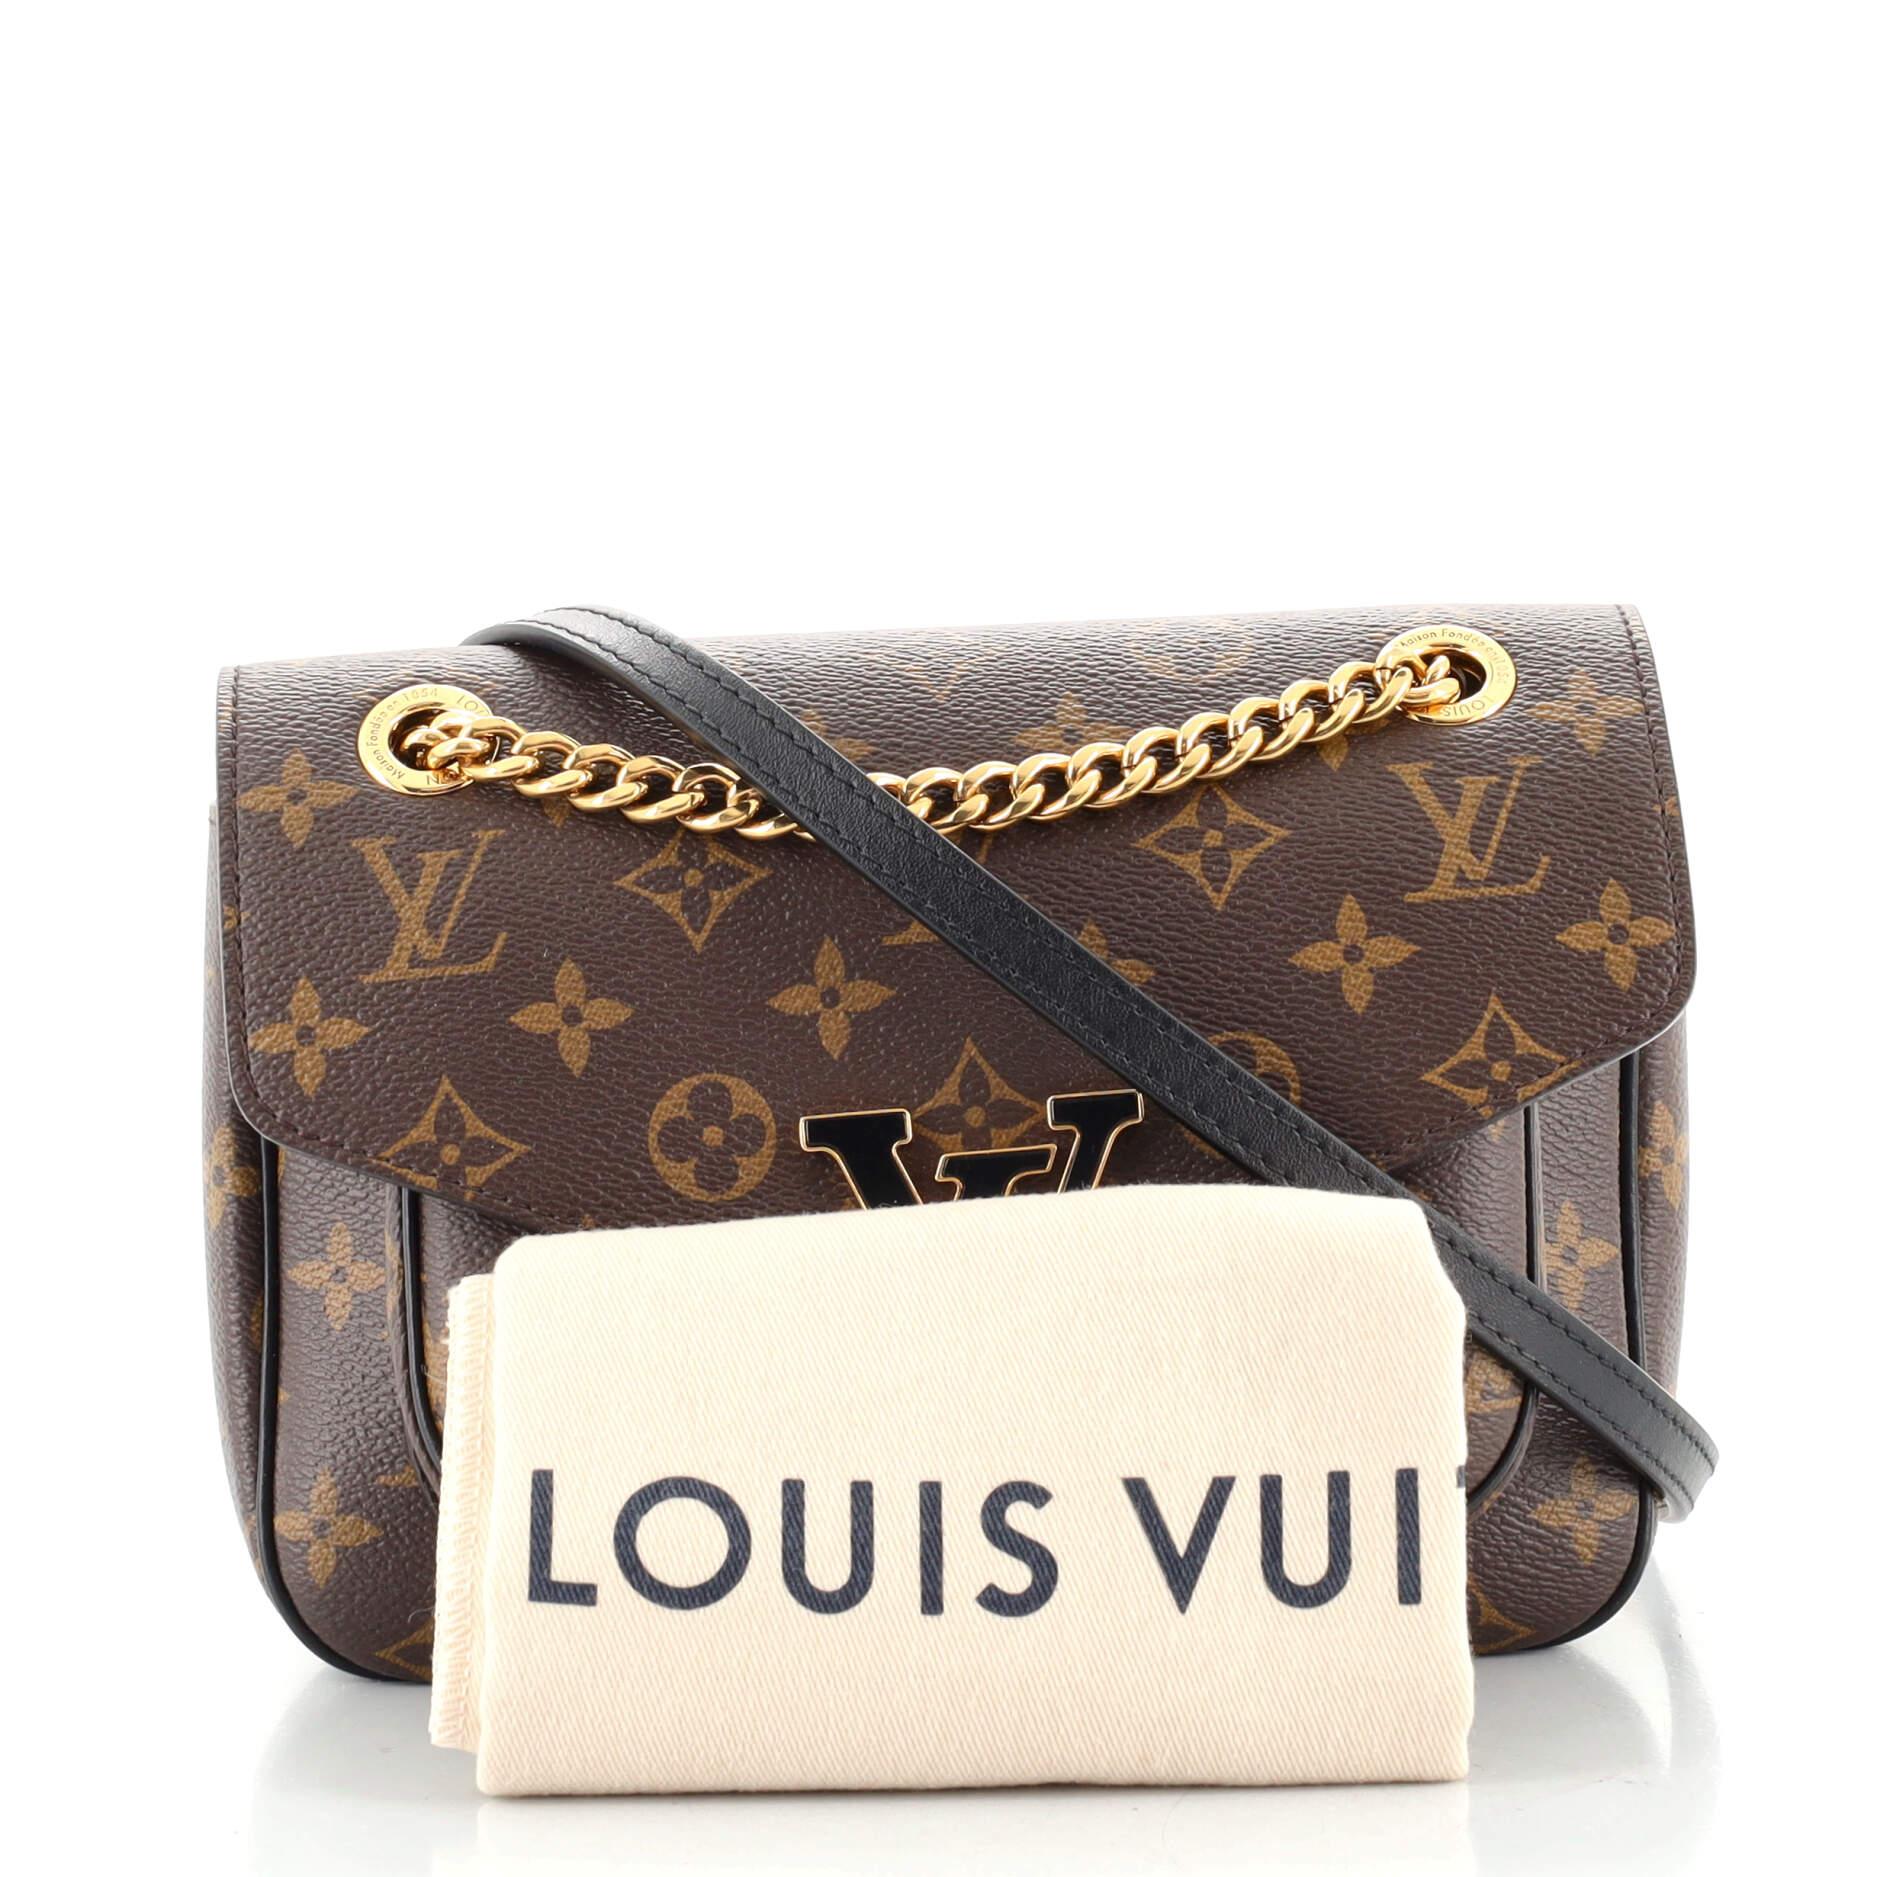 Louis Vuitton Passy Monogram Bag - For Sale on 1stDibs